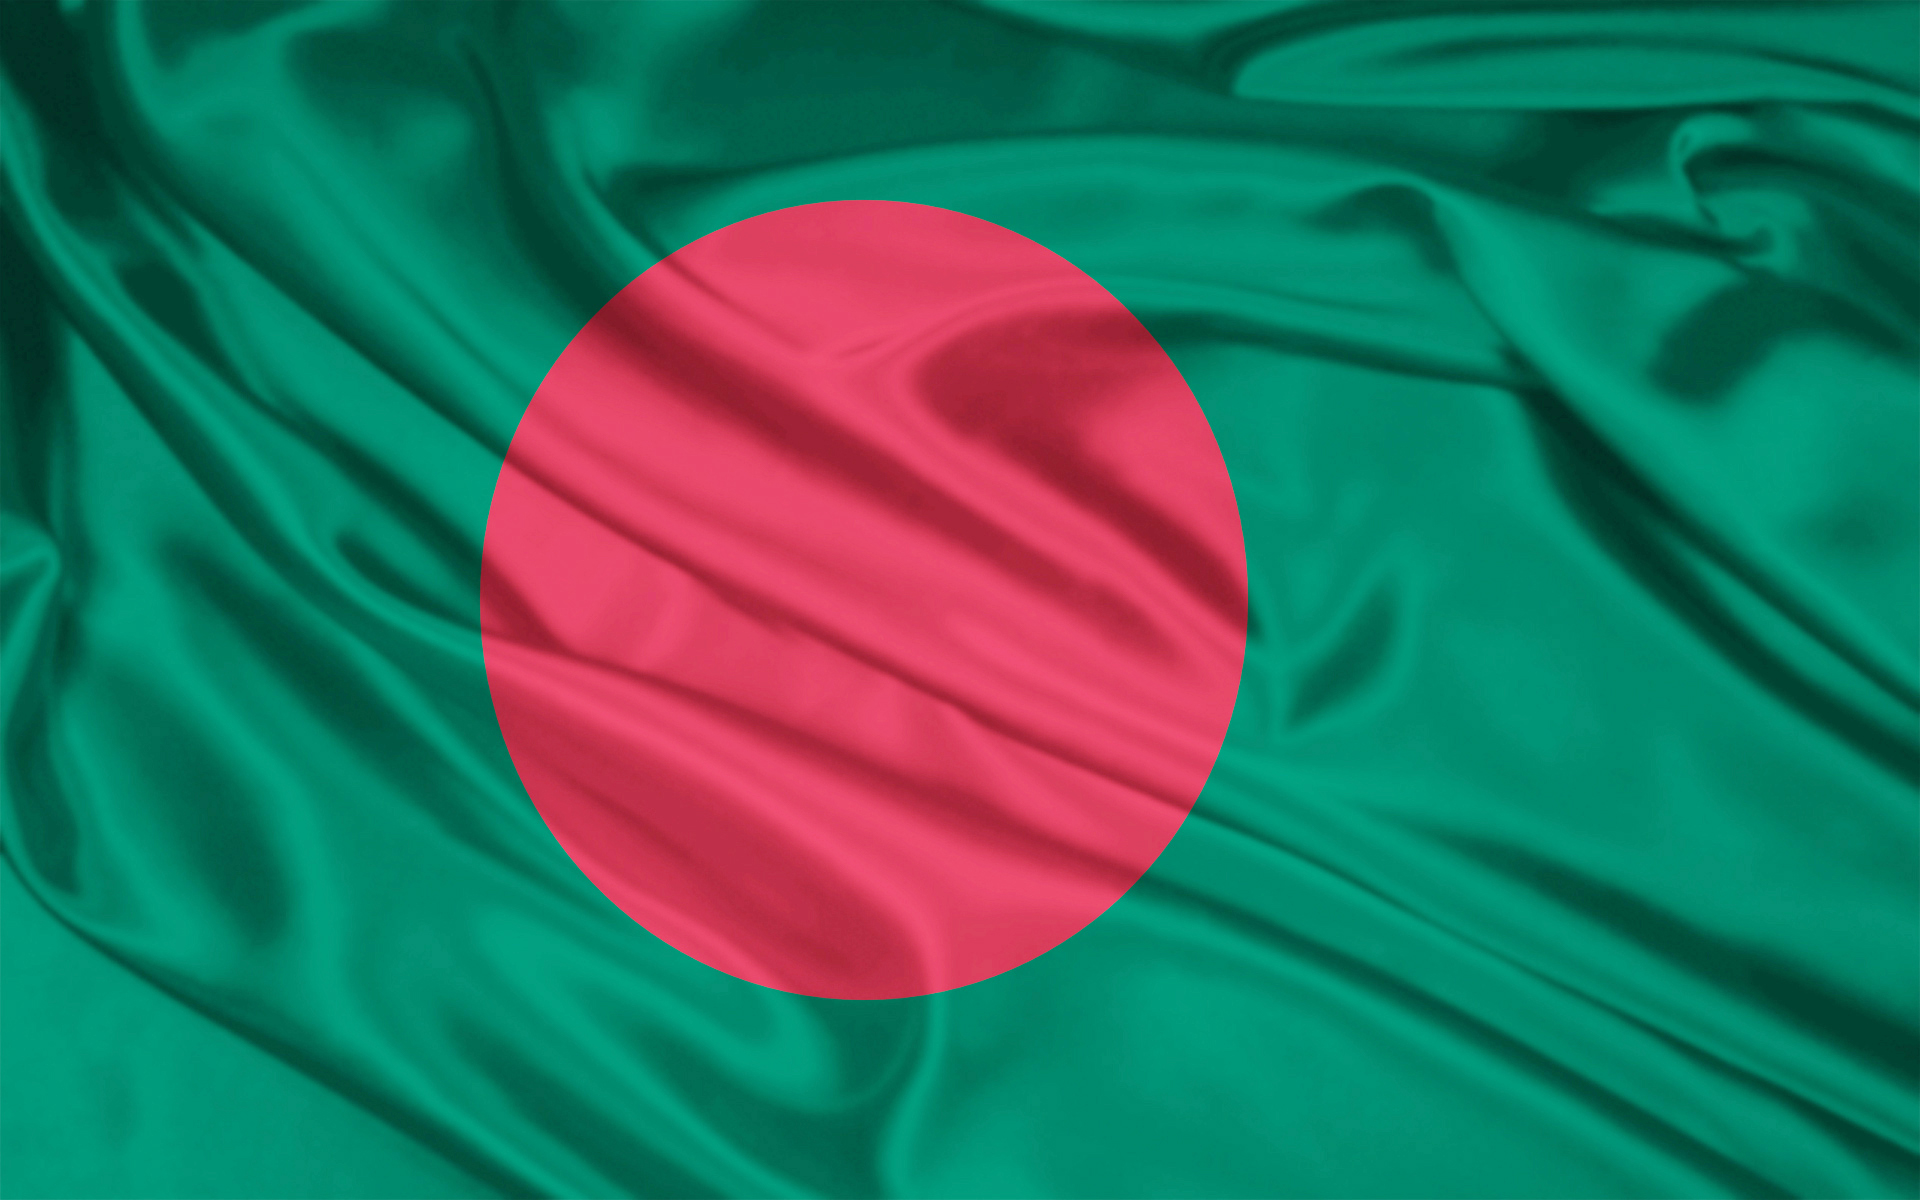 bangladesh flag wallpaper hd,green,red,teal,turquoise,aqua